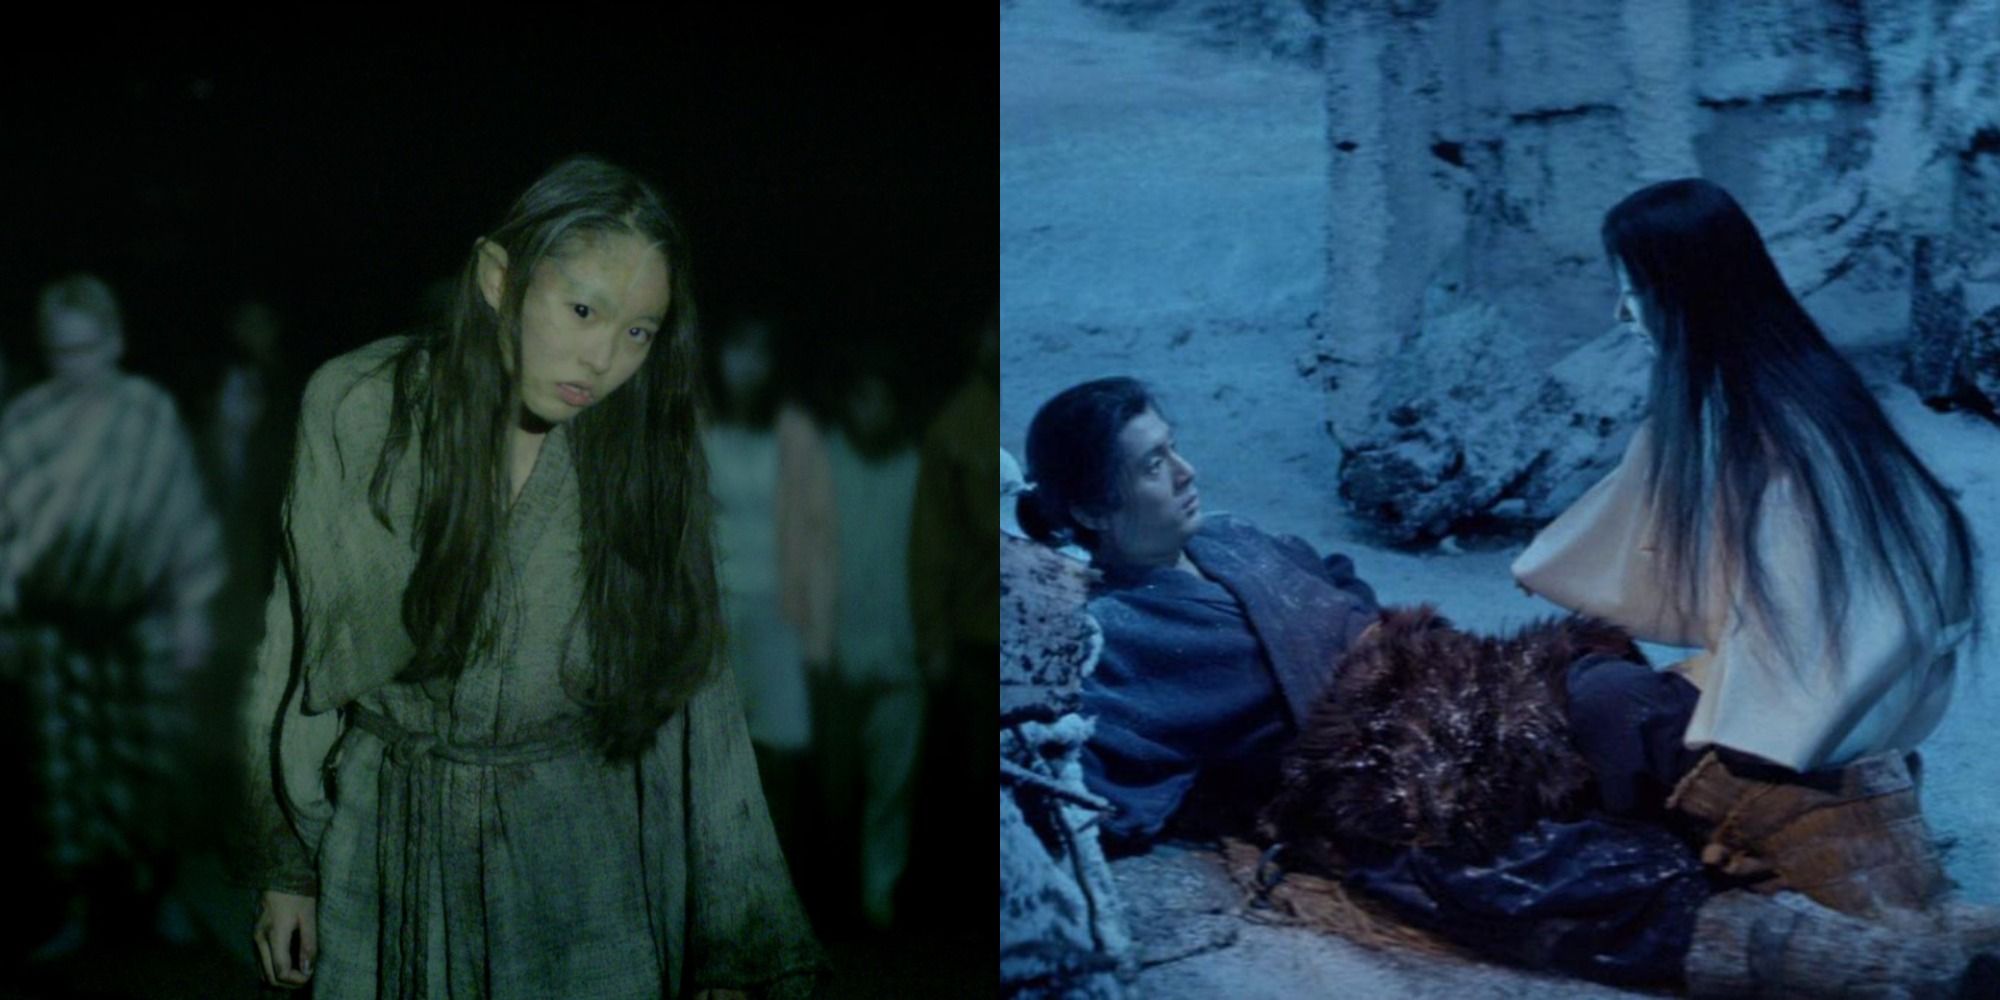 Ten Masterful Asian Film Trilogies